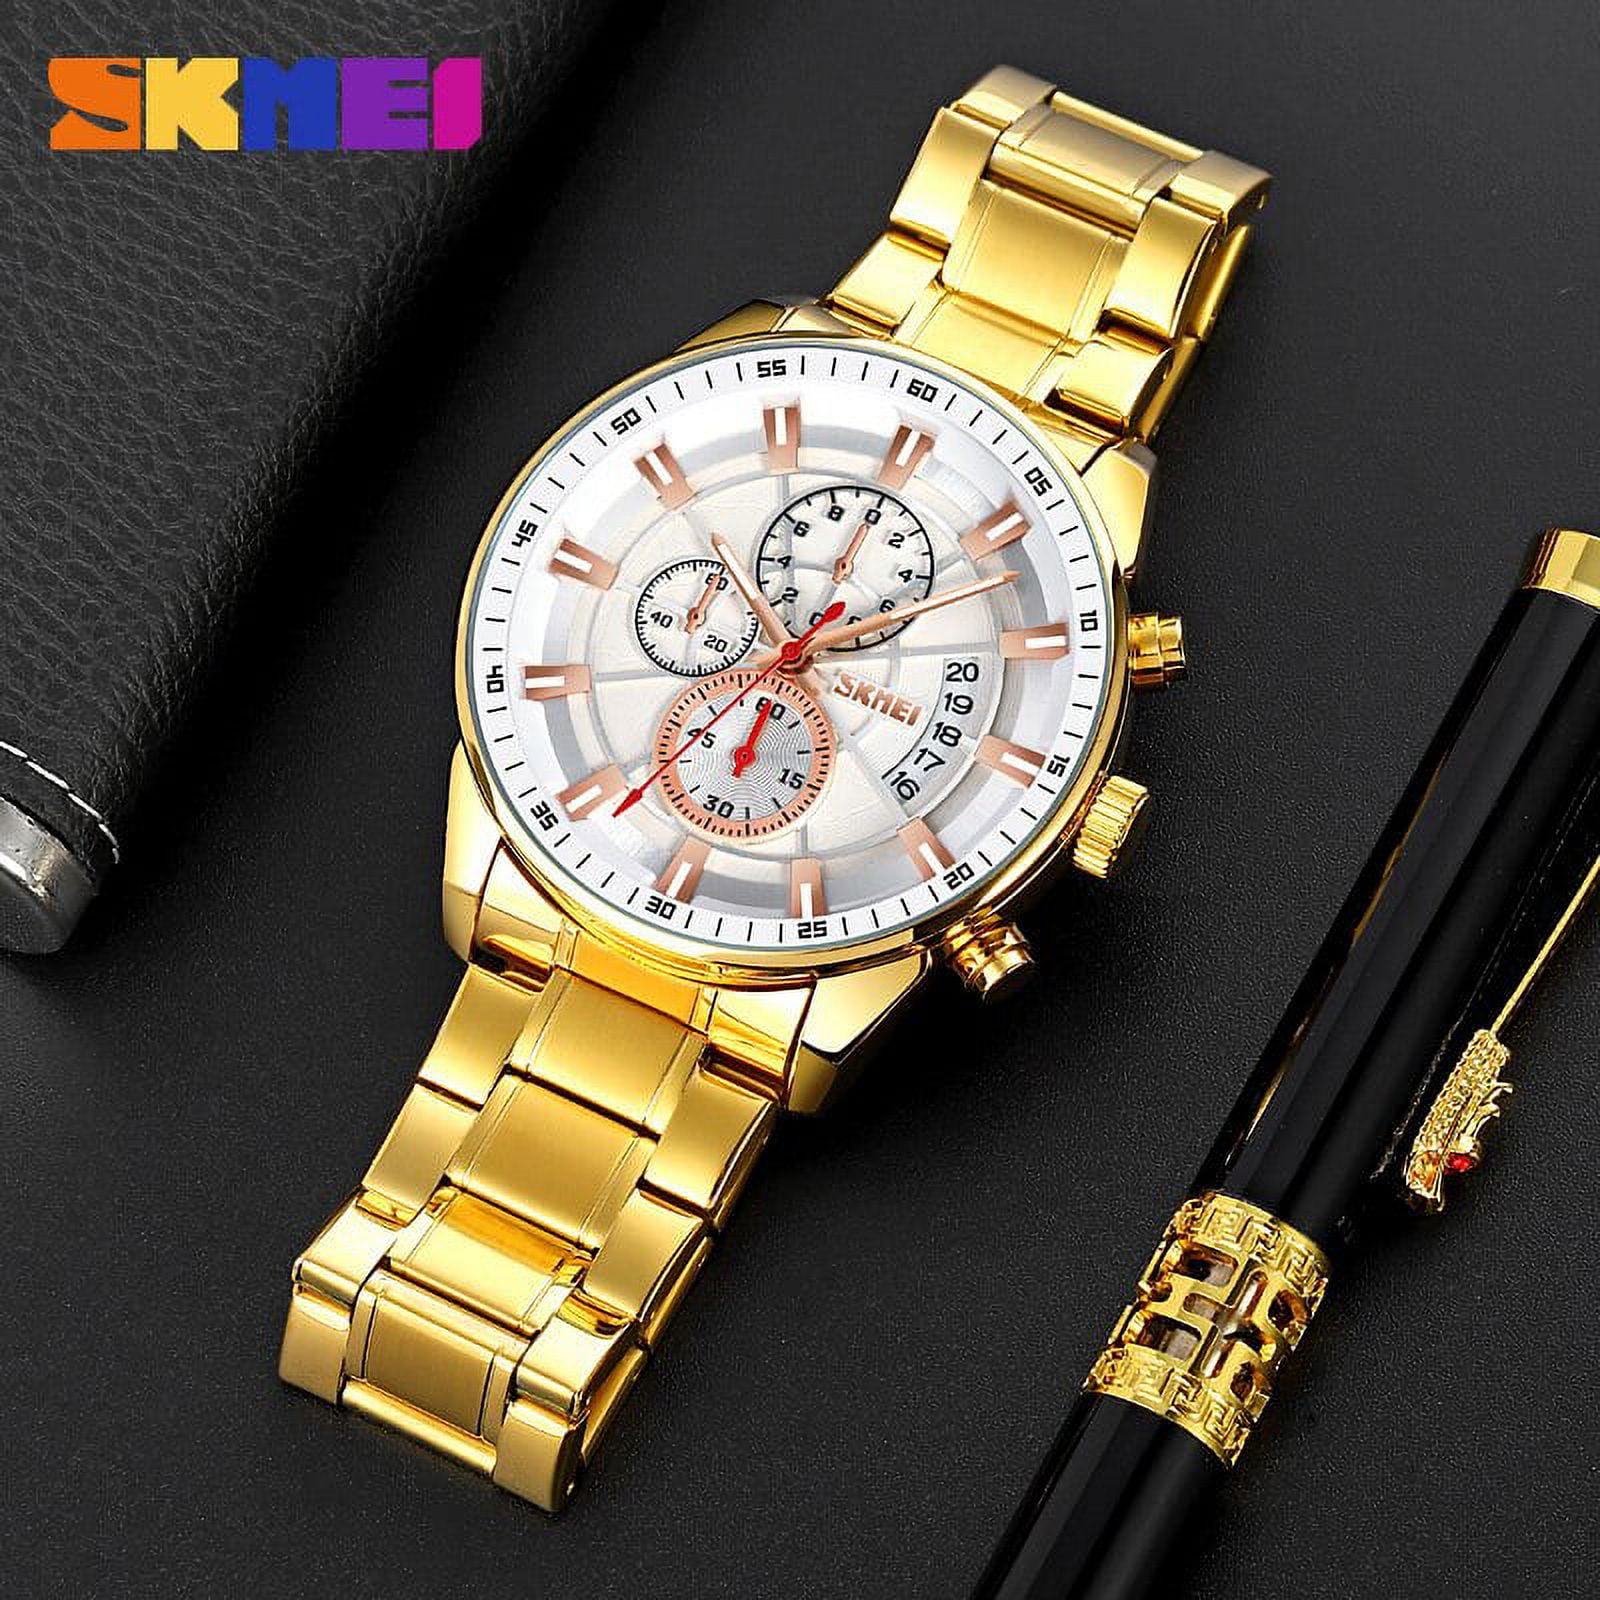 Fashion Quartz Watch Luxury Brand Skmei Men's Watches Simple Dial Calendar Watch for Man Original Design Leather Wristwatch, Size: One size, Pink